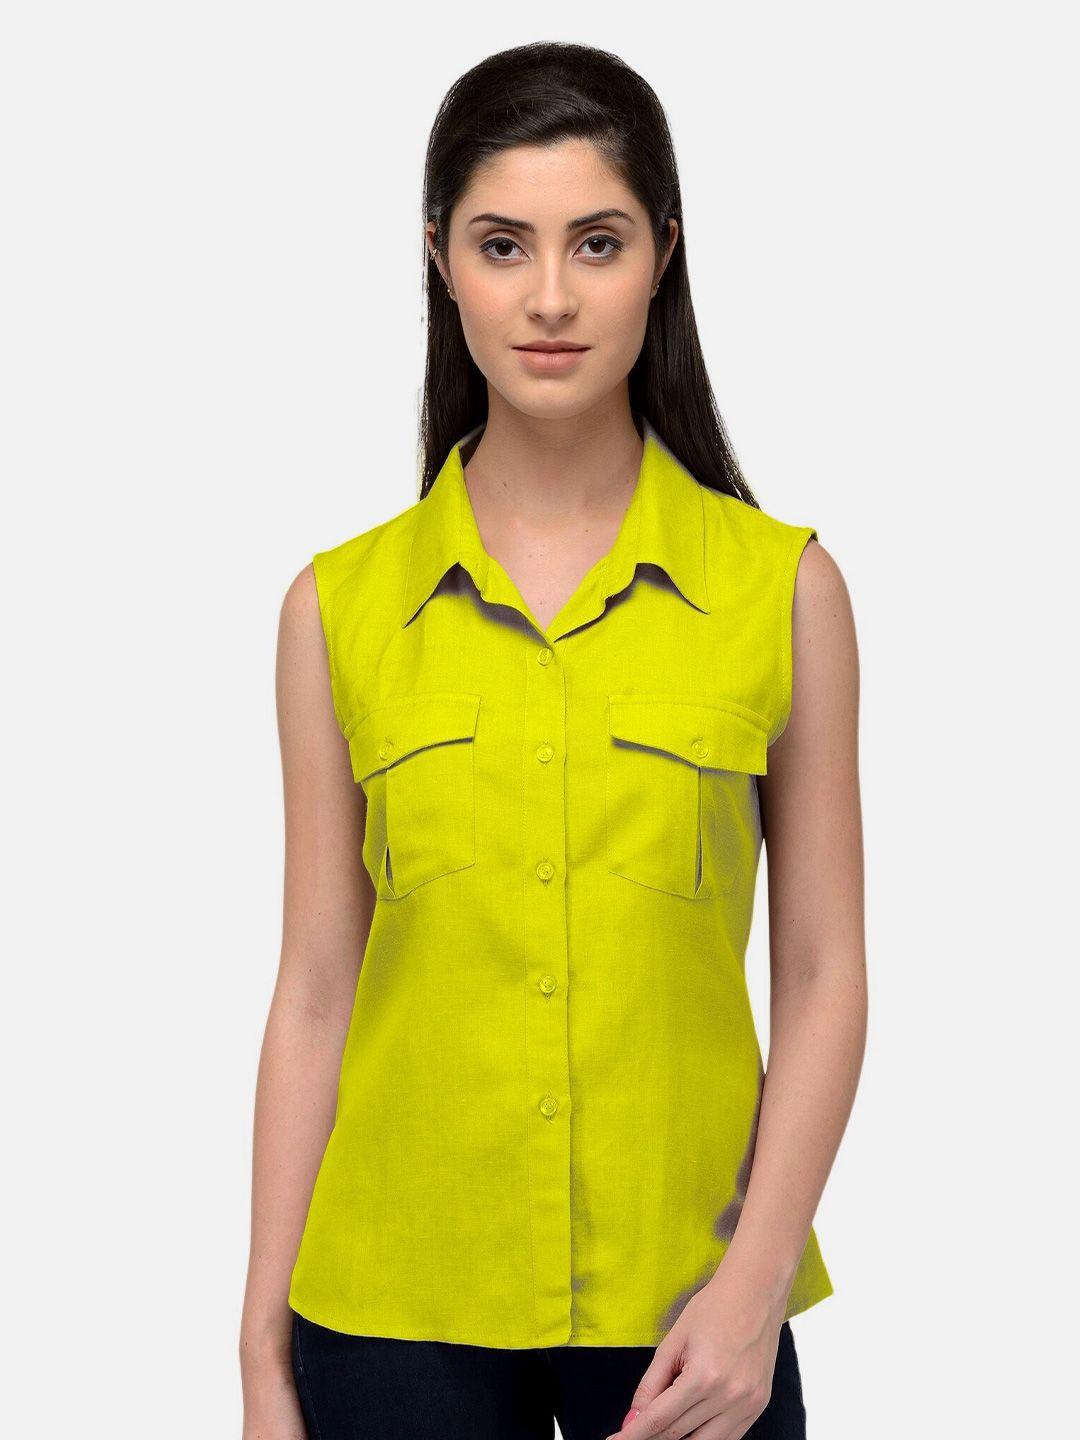 patrorna women yellow comfort casual shirt